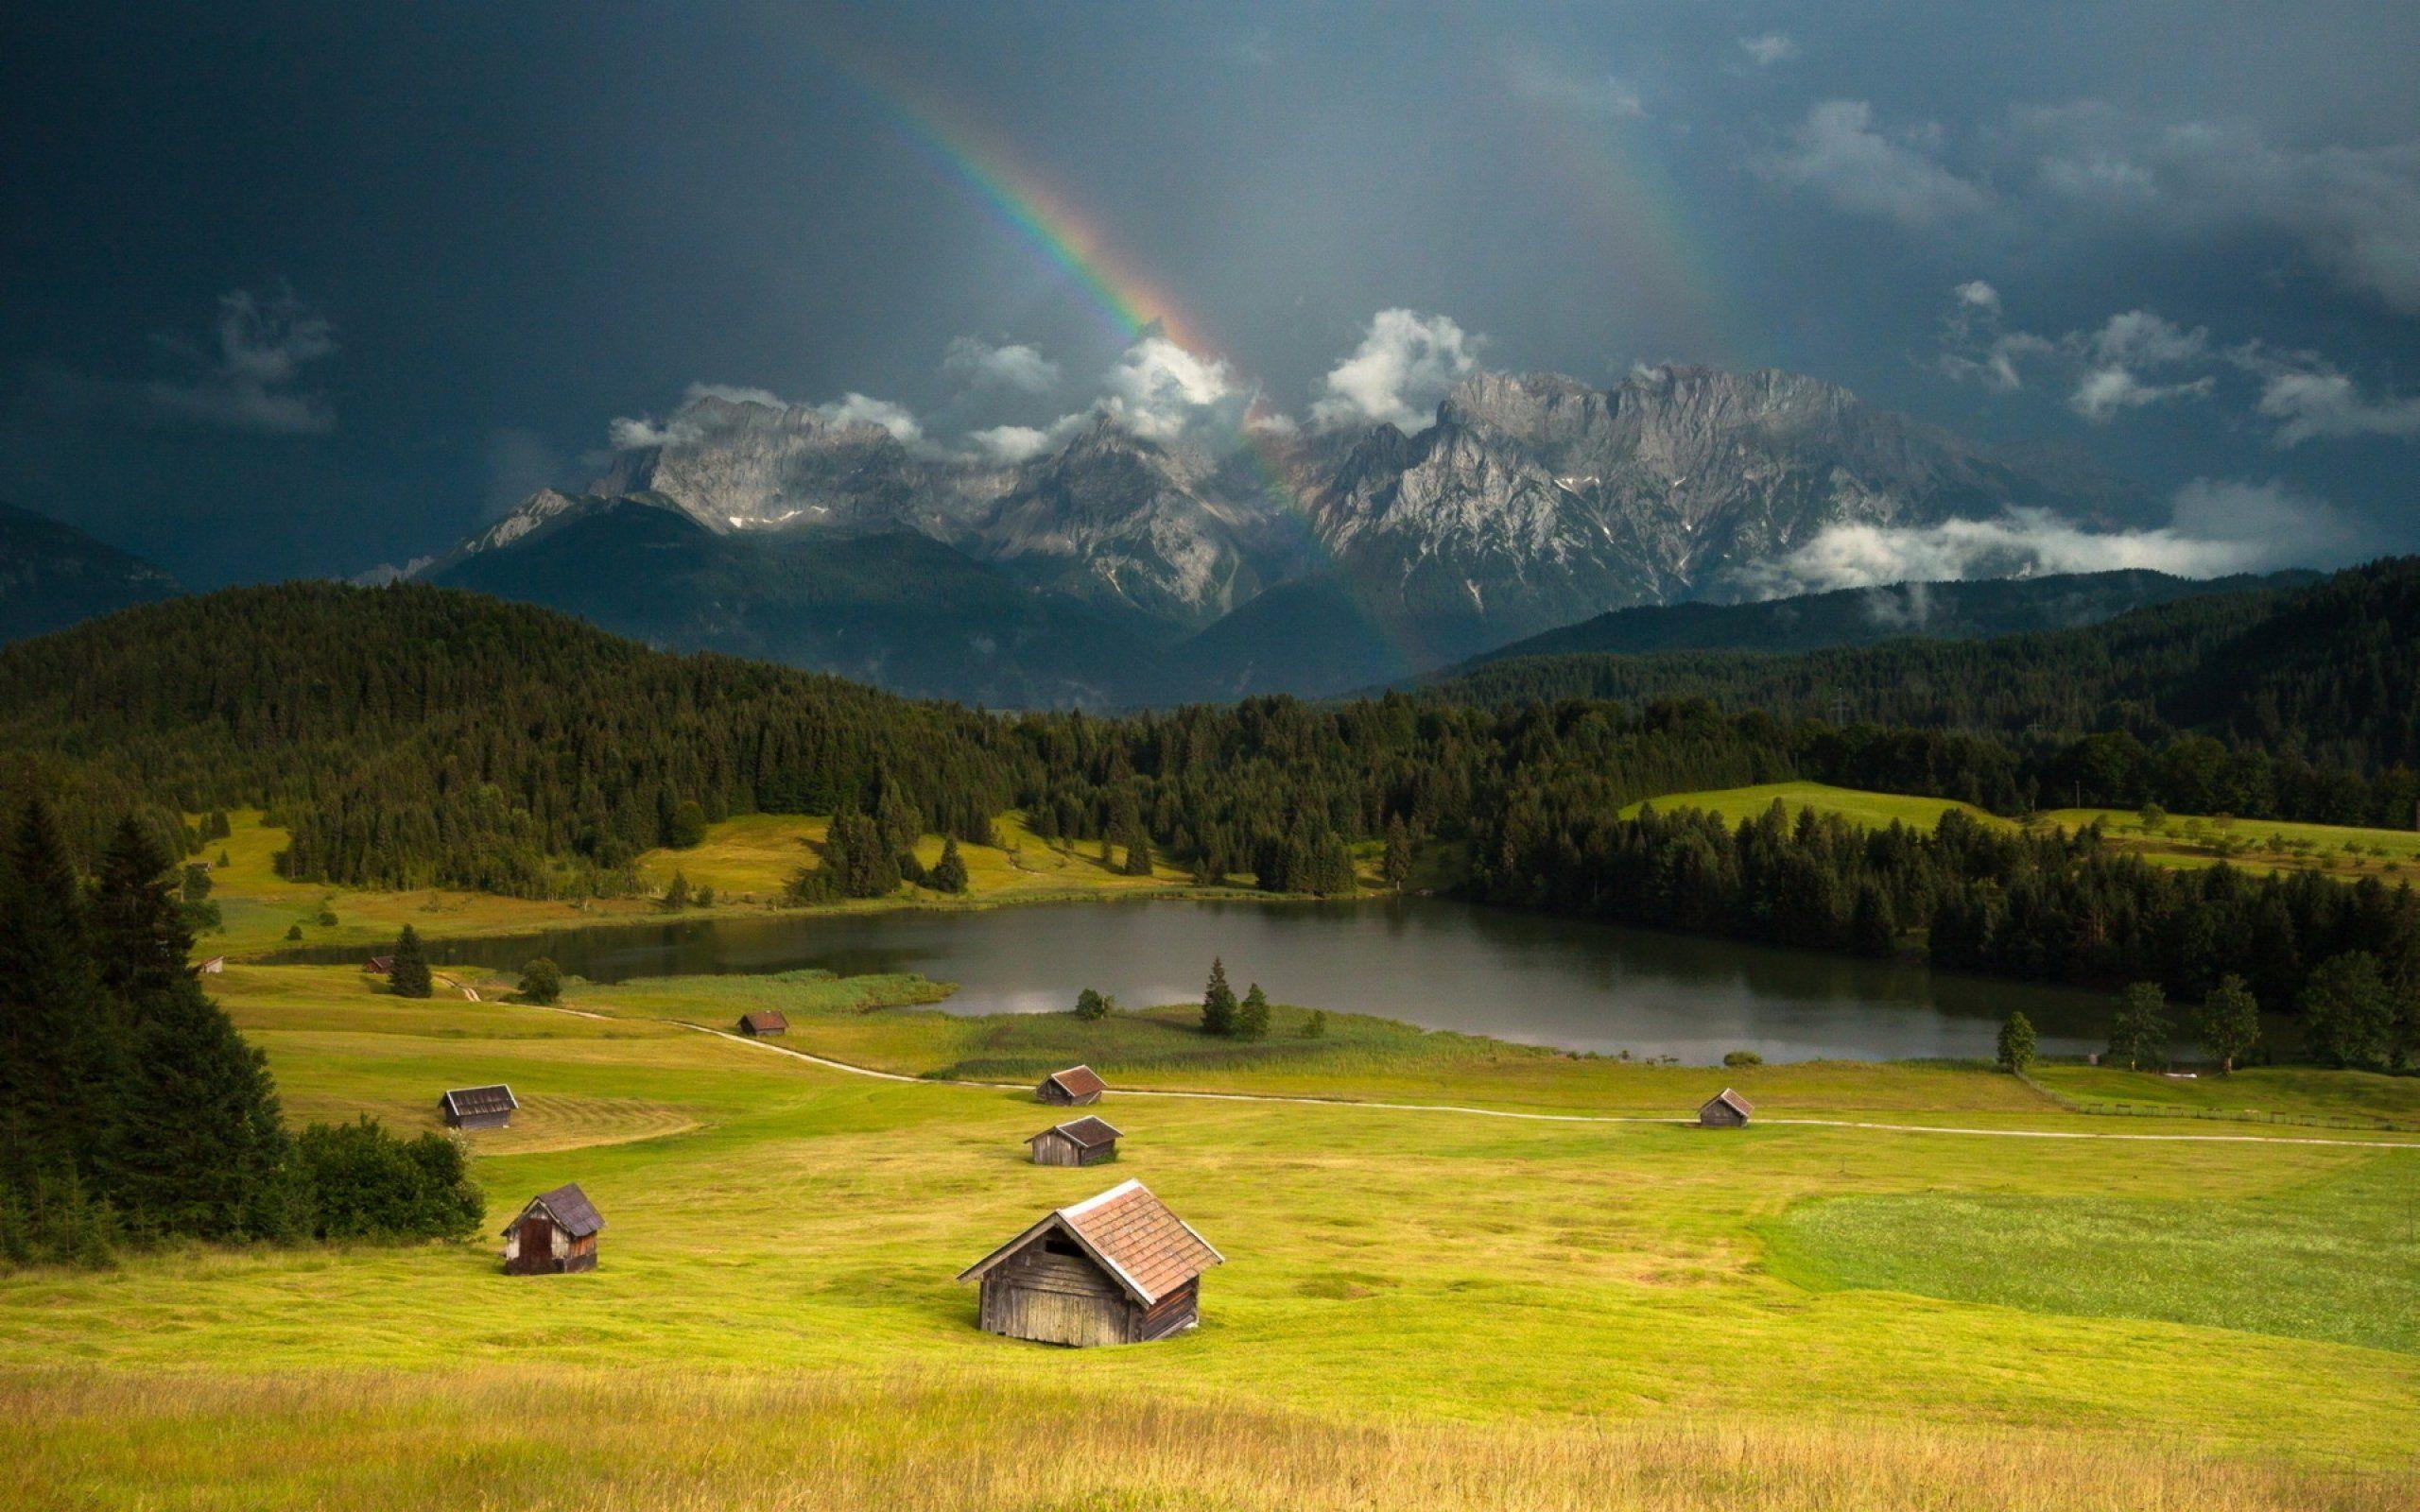 mountains, landscape, nature, mountain, rainbow, rain, rustic, farm